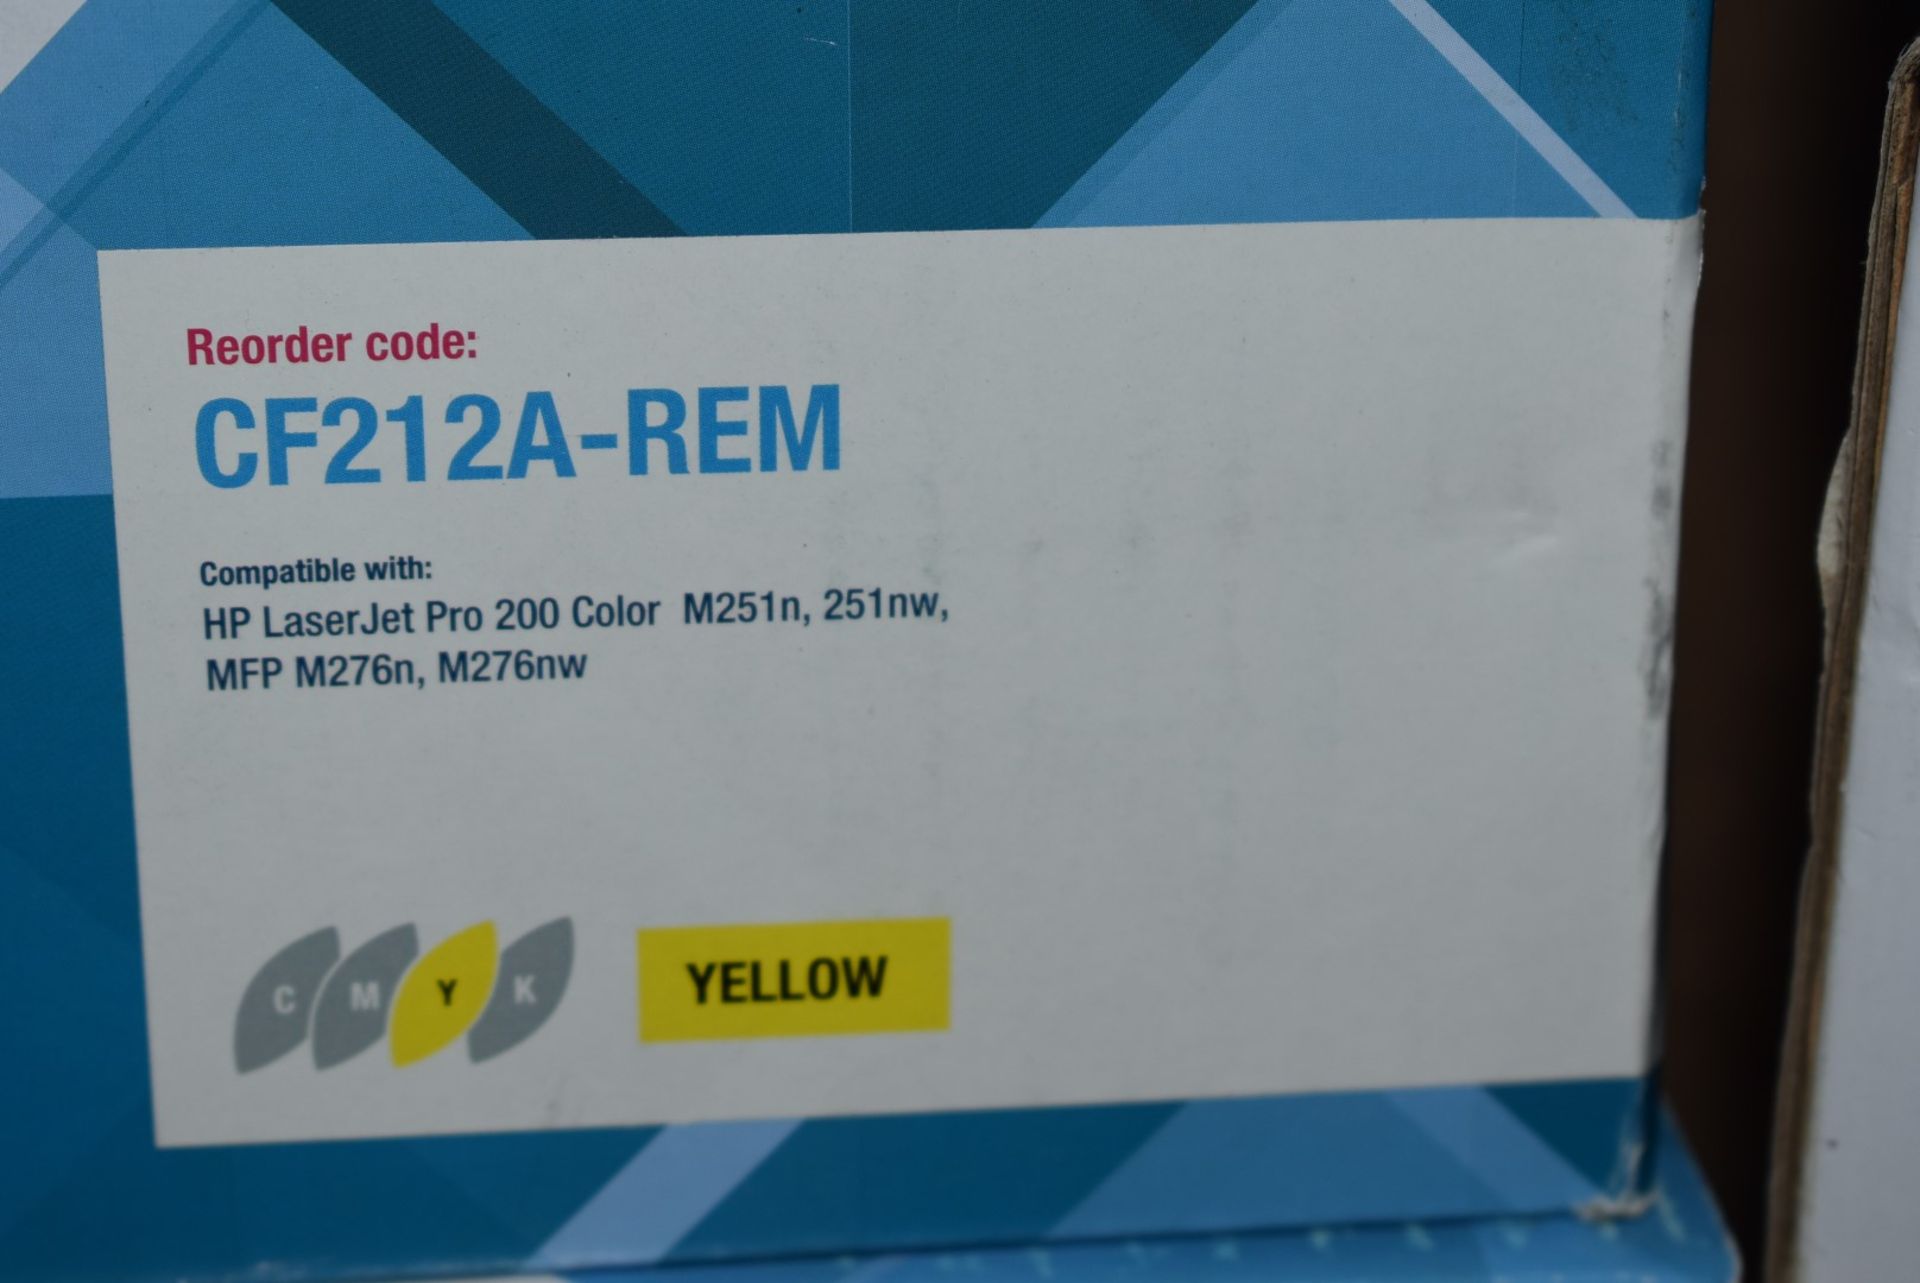 7 x Toner Cartridges Suitable For HP LaserJet 200 Colour Printers - Unused Boxed Cartridge Save - Image 4 of 7